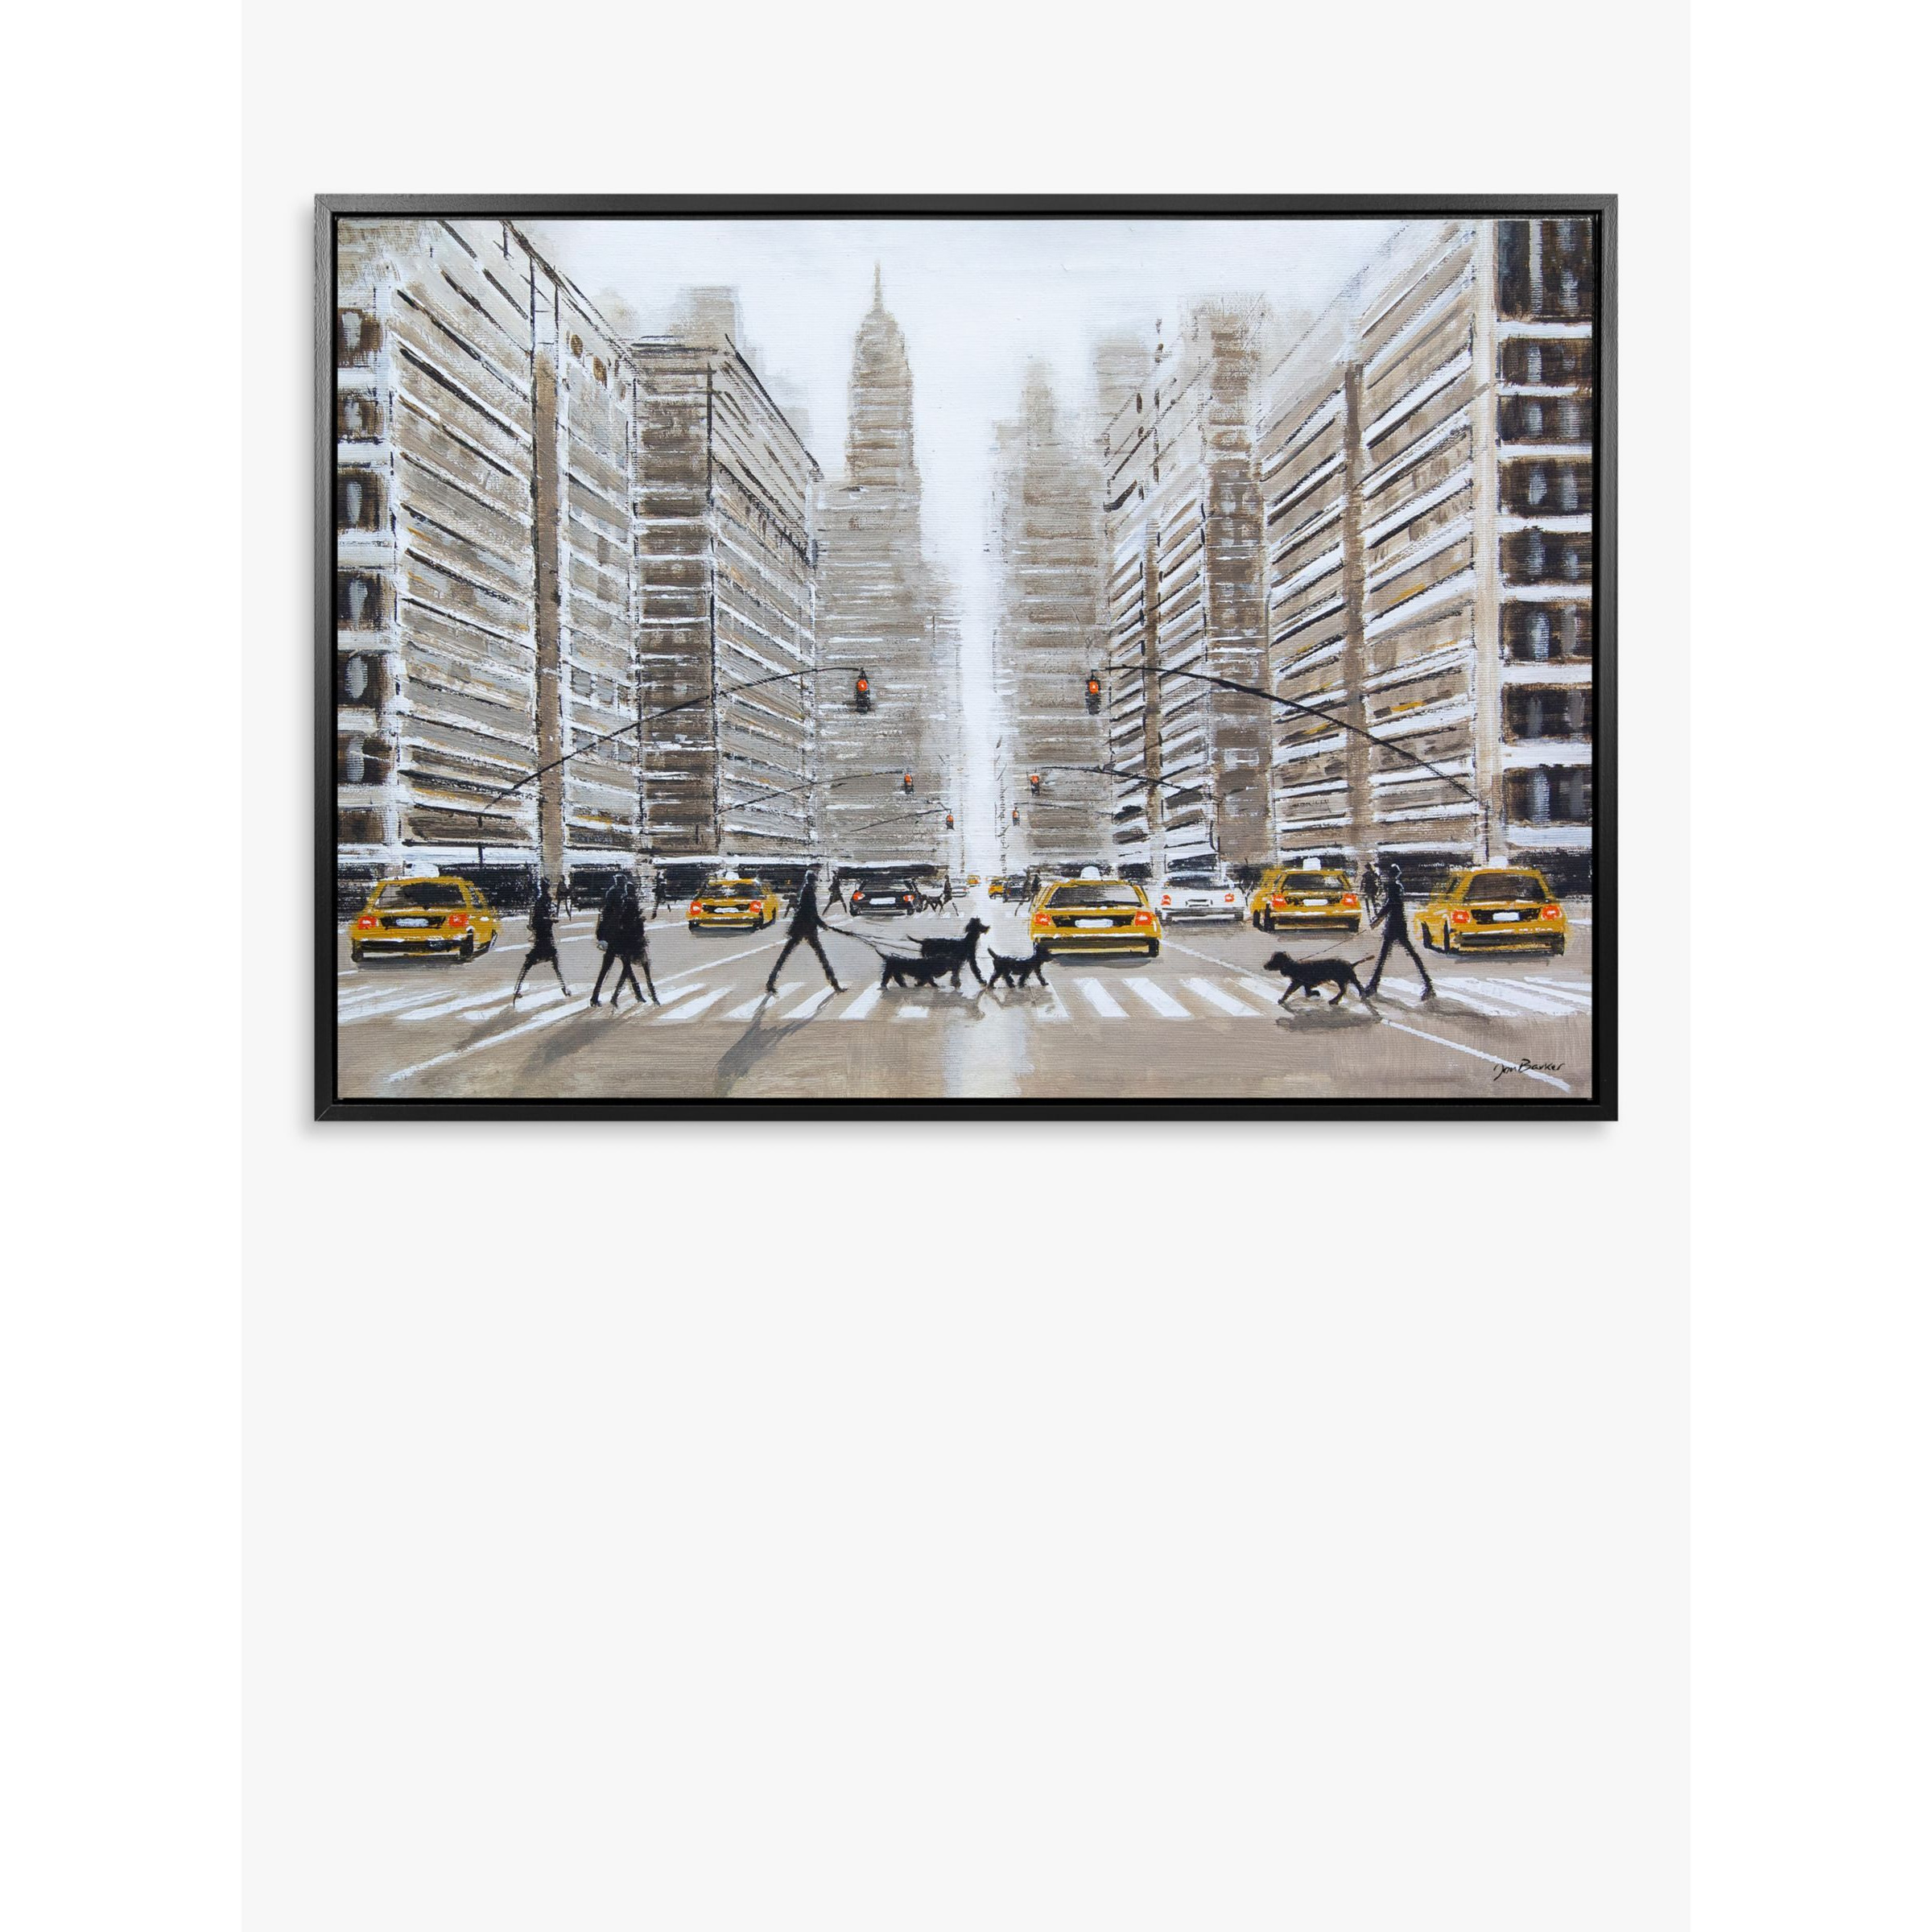 John Lewis Jon Barker 'Dog Walker Day' New York Framed Canvas Print, 70 x 100cm, Grey - image 1